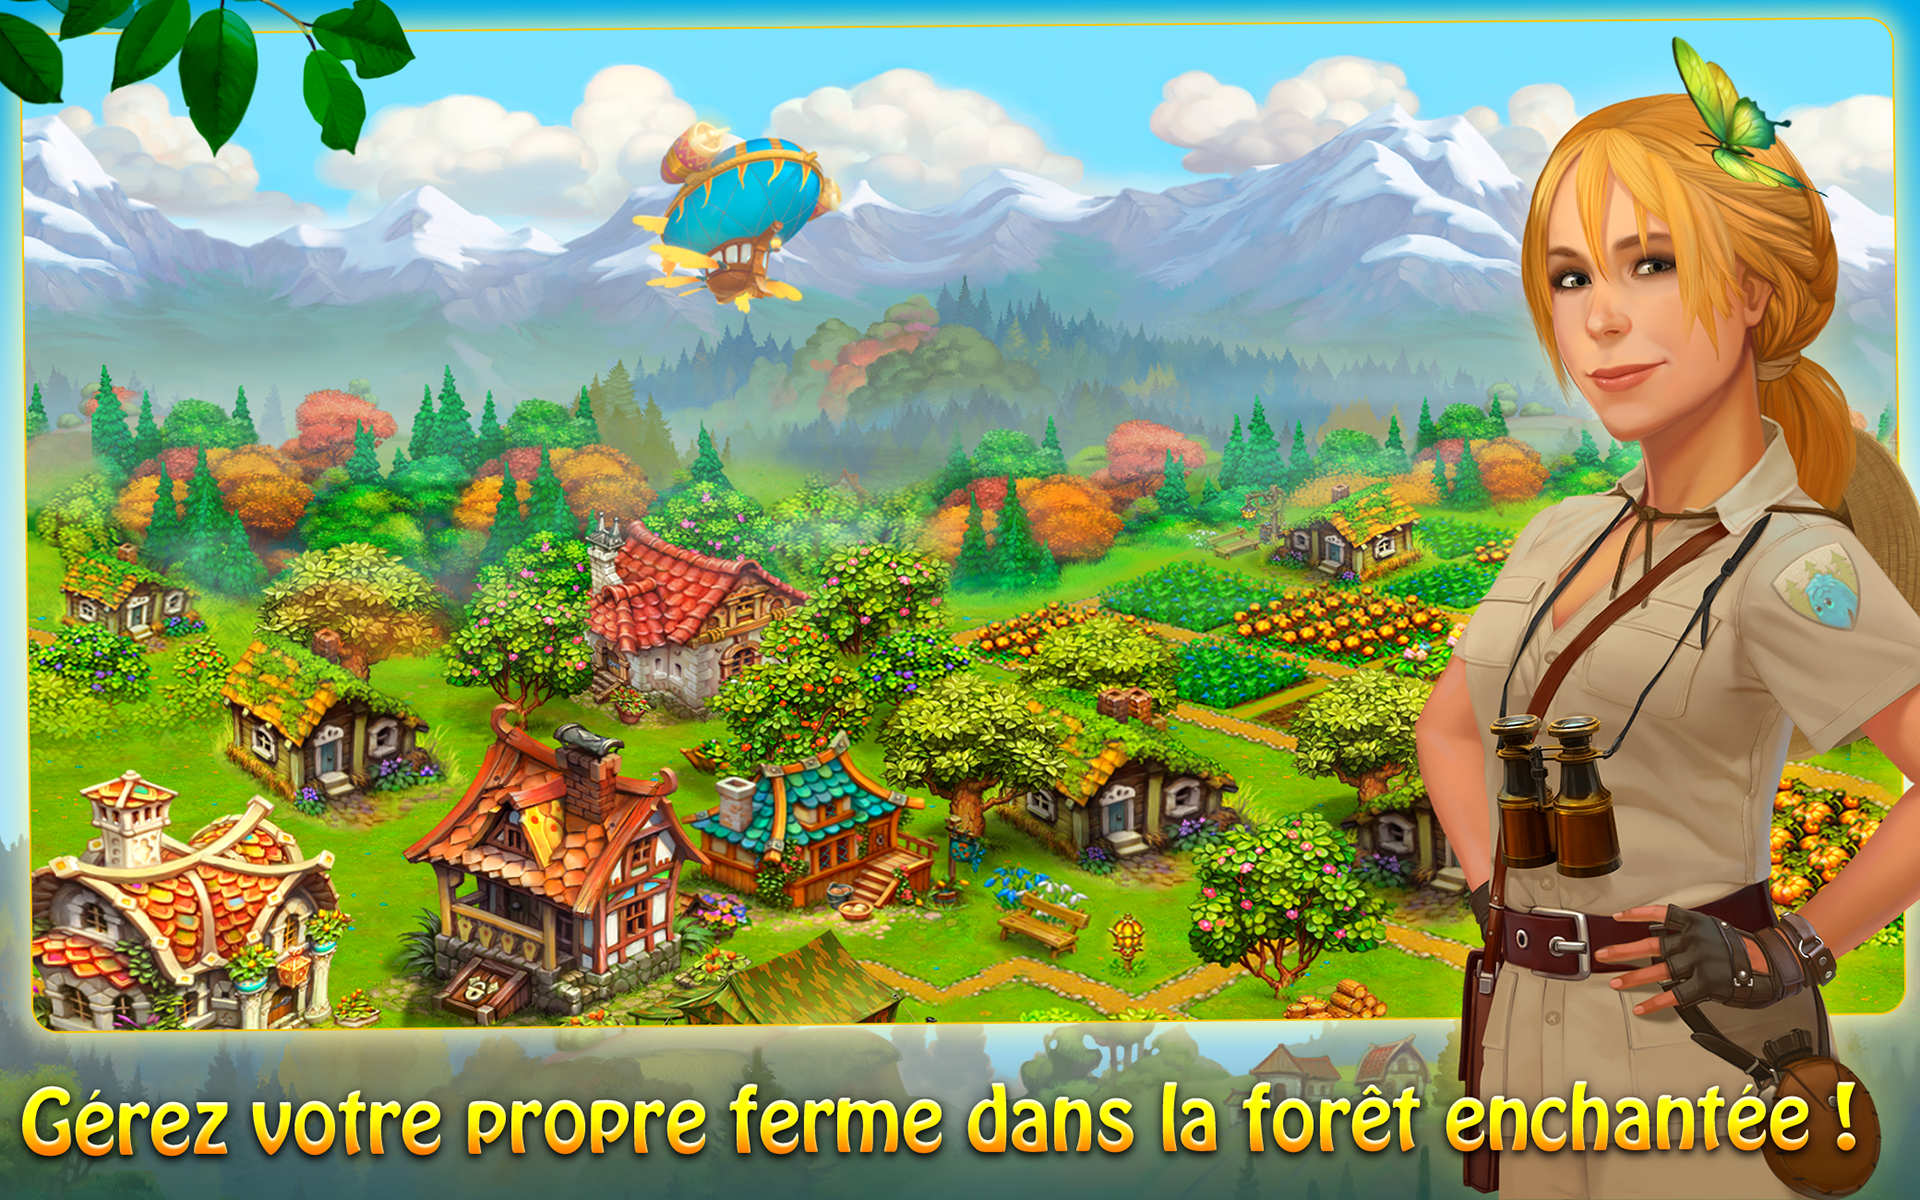 Screenshot 1 of Charm Farm - Village forestier 1.176.17